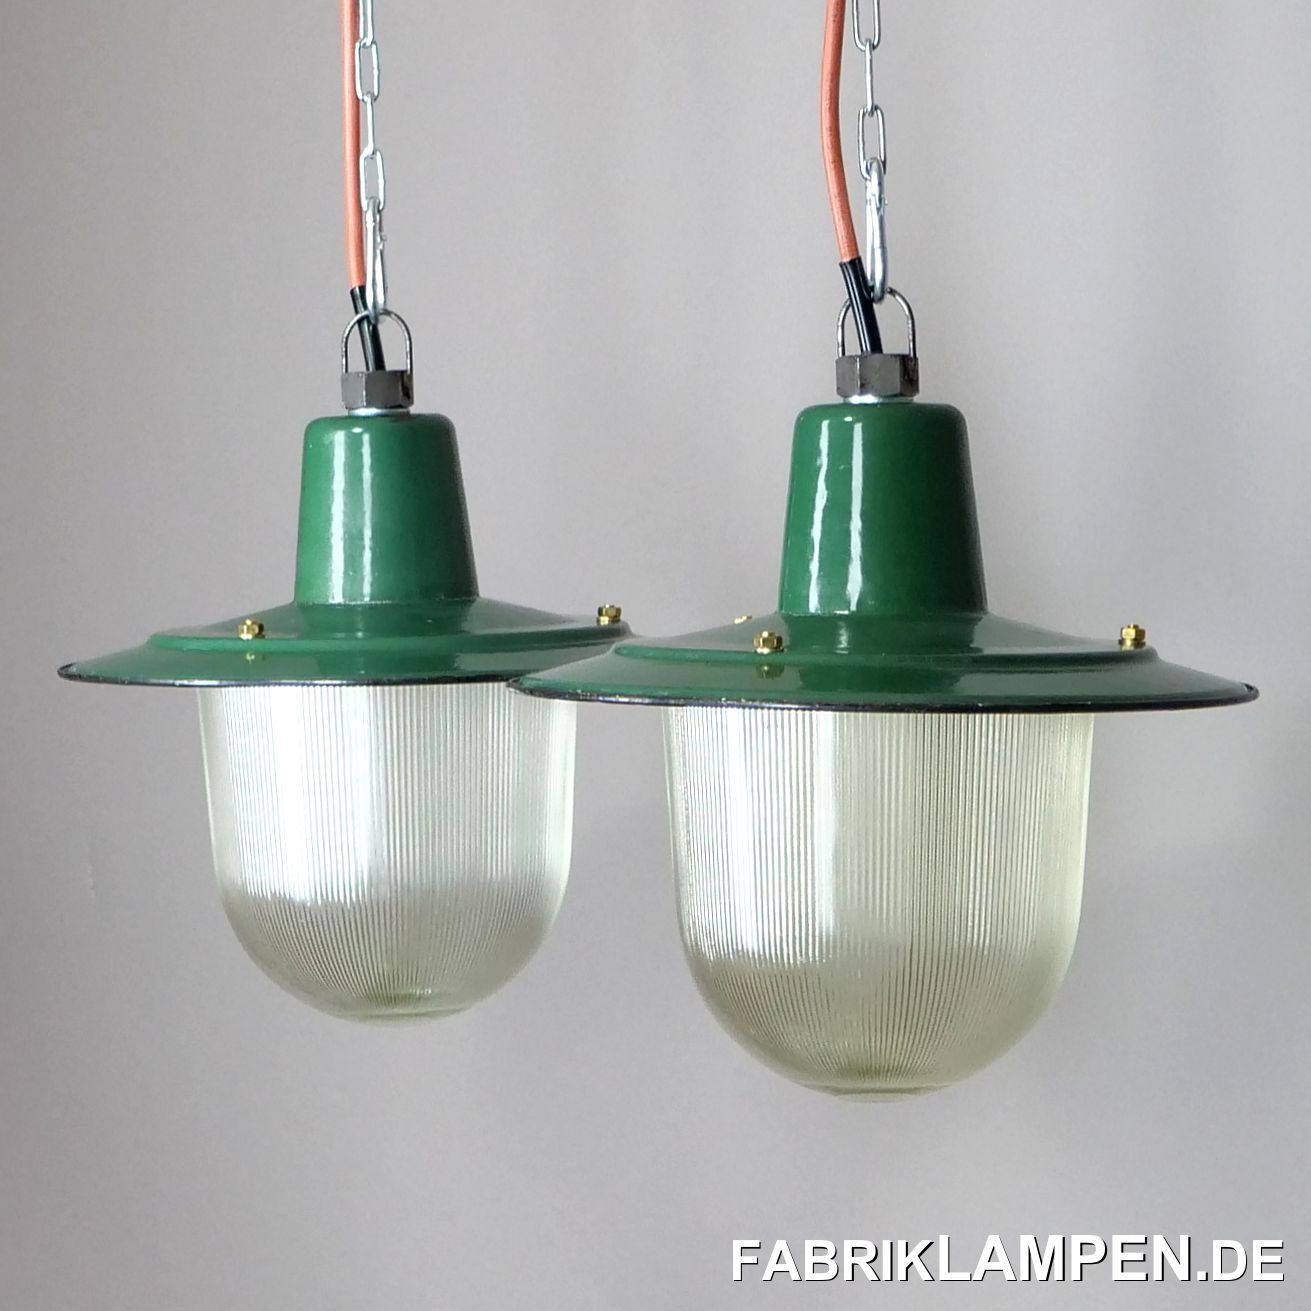 Voorzieningen Miljard Zuinig Alte restaurierte Fabriklampen kaufen - fabriklampen.de - große Auswahl